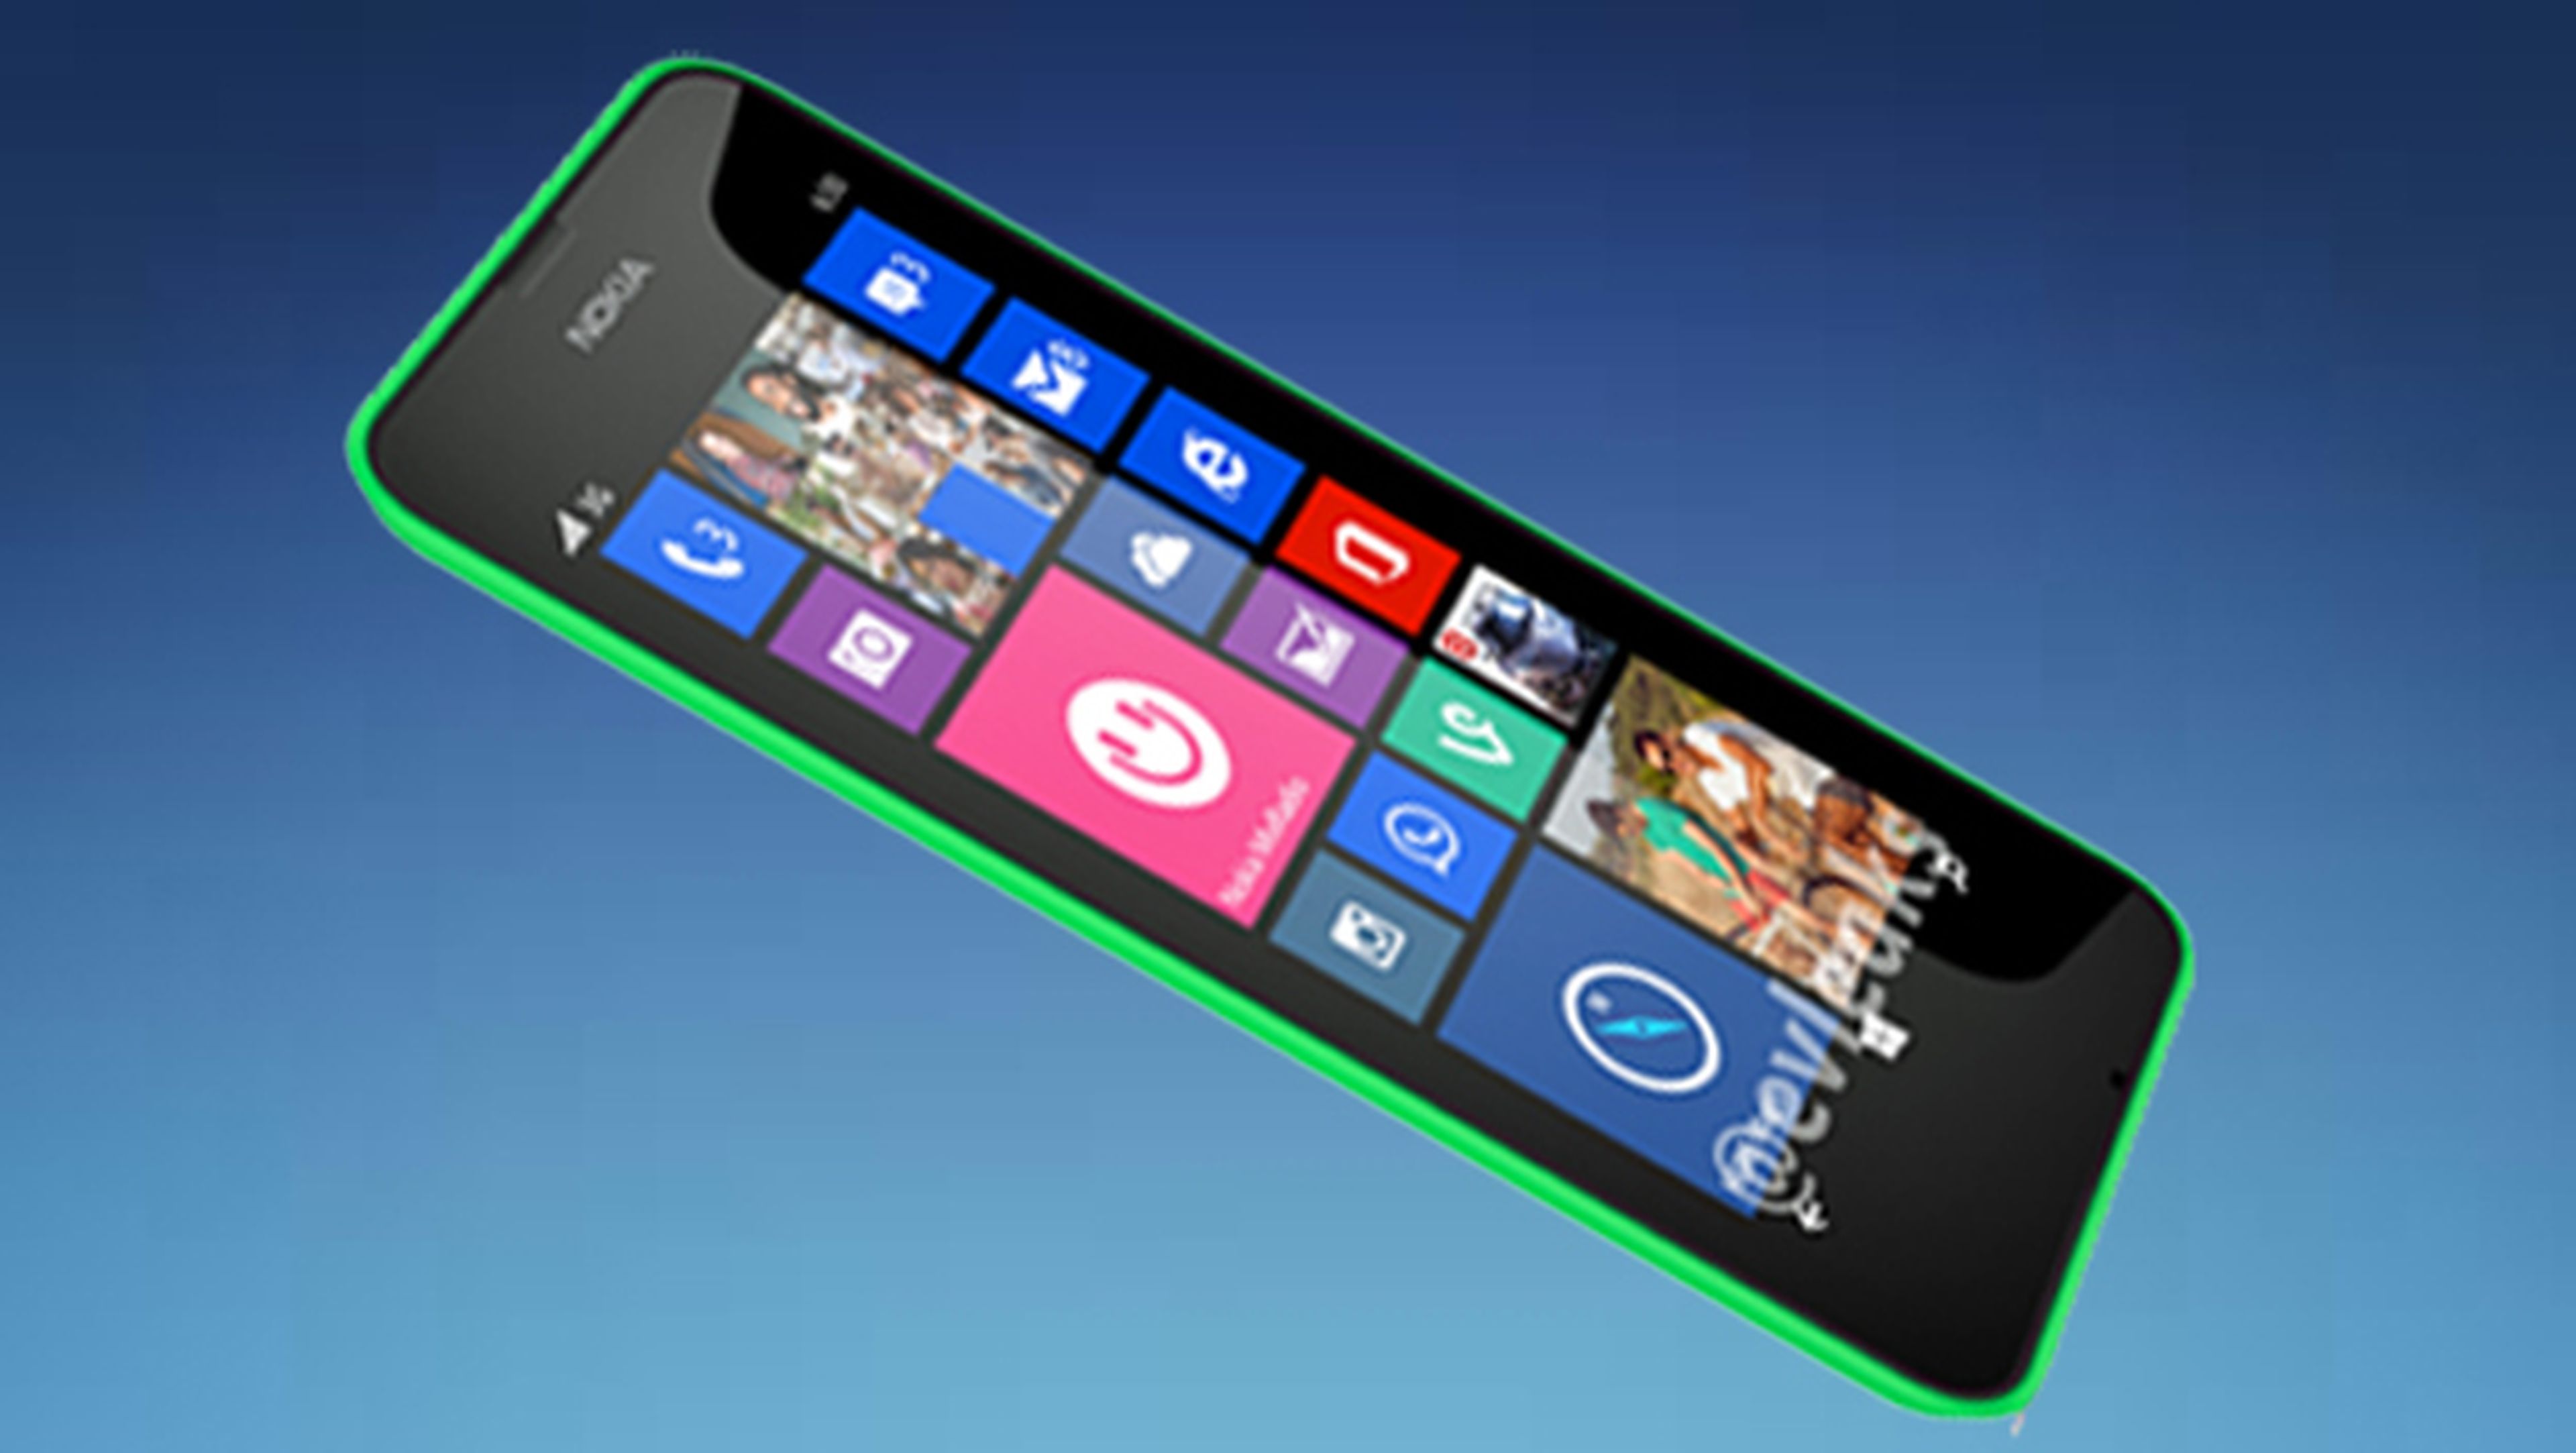 Nokia Lumia 630: desvelada imagen antes de su presentación